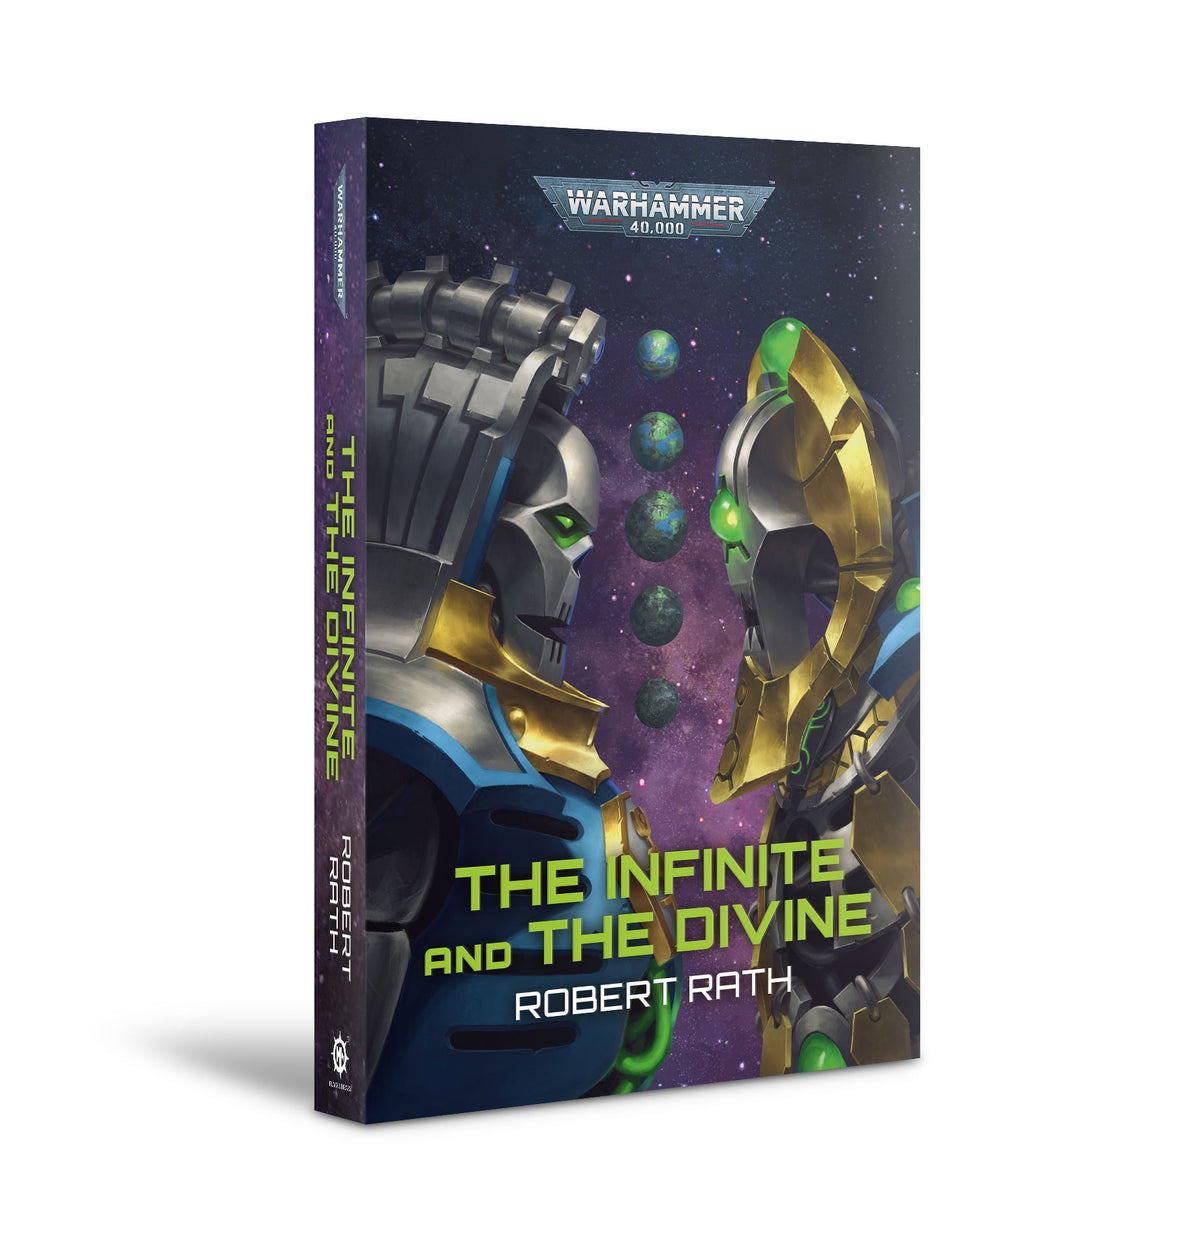 The Infinite and the Divine (Novel PB)